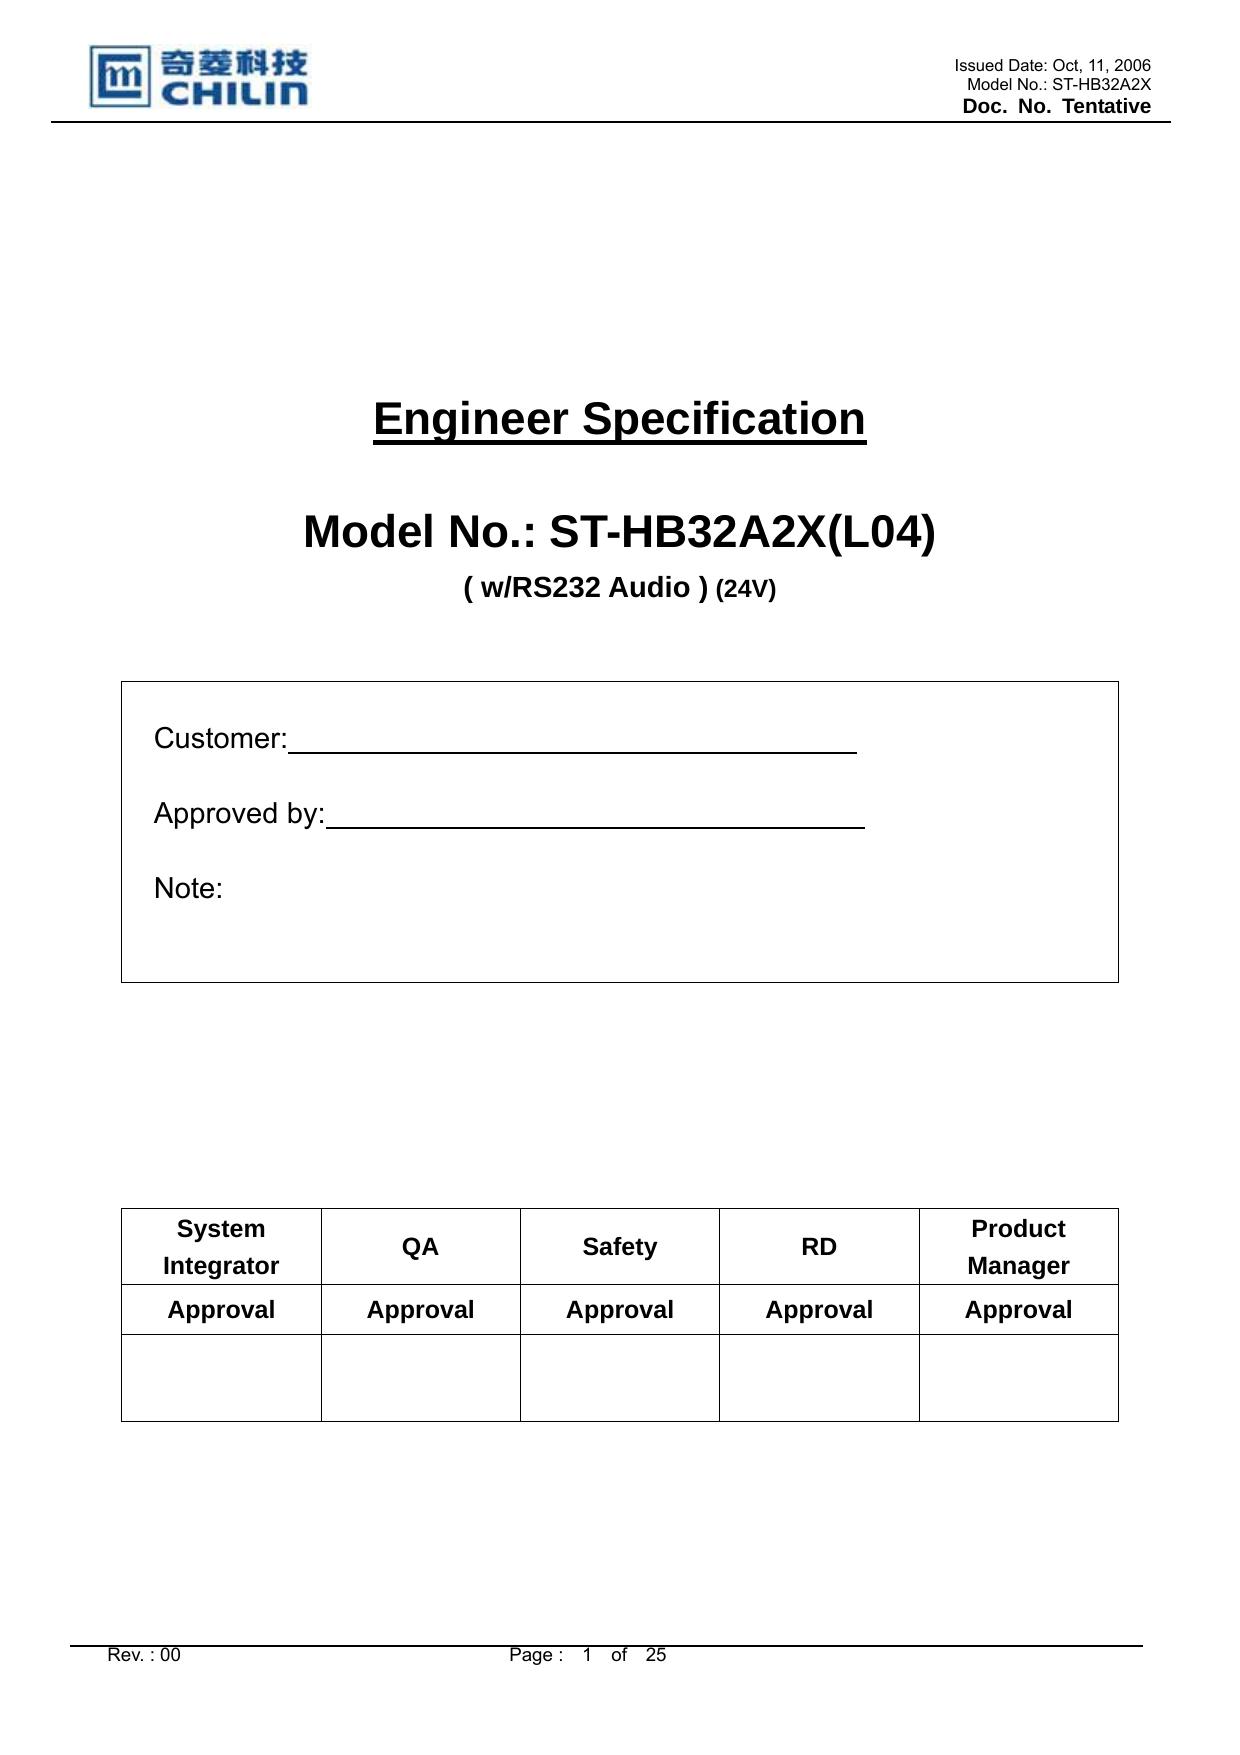 Engineer Specification